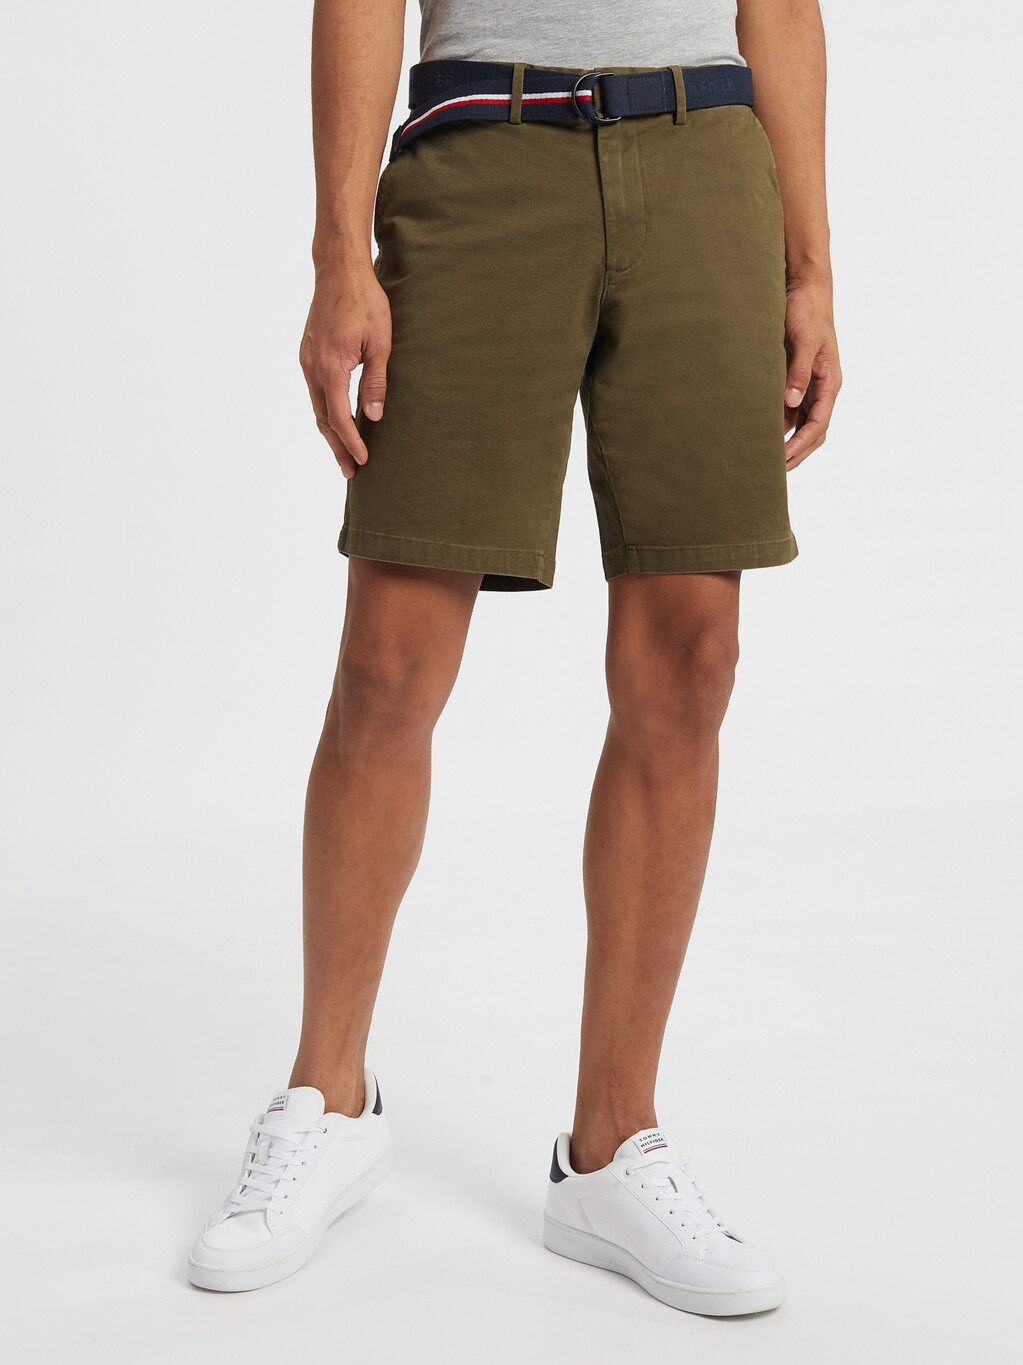 Essential Brooklyn Organic Cotton Twill Shorts With Belt, Army Green, hi-res